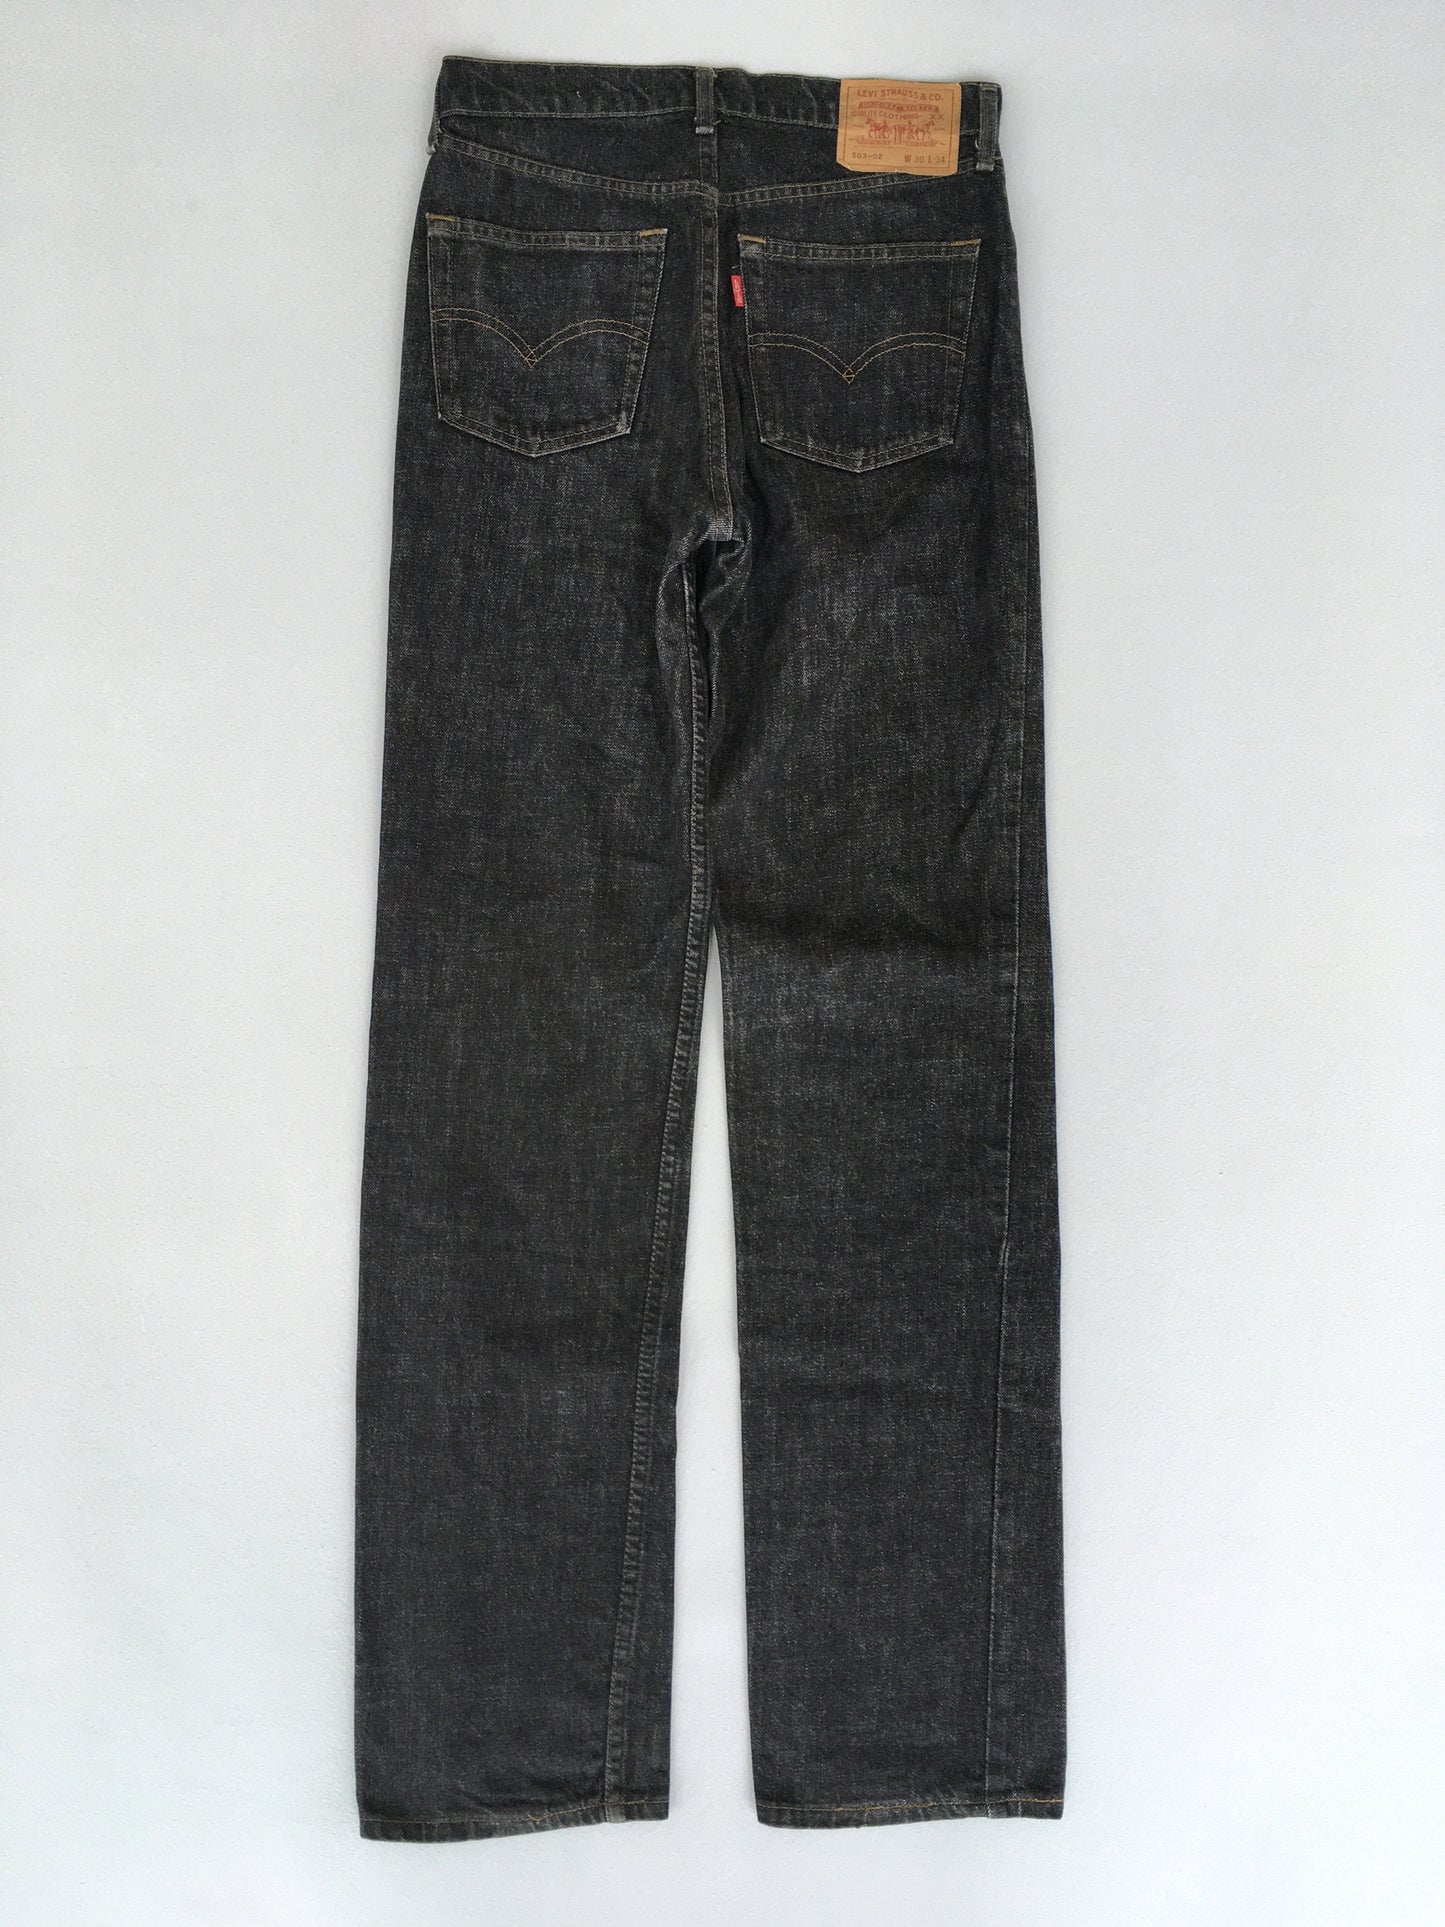 Levi's 503 Dark Black Jeans Size 28x33.5